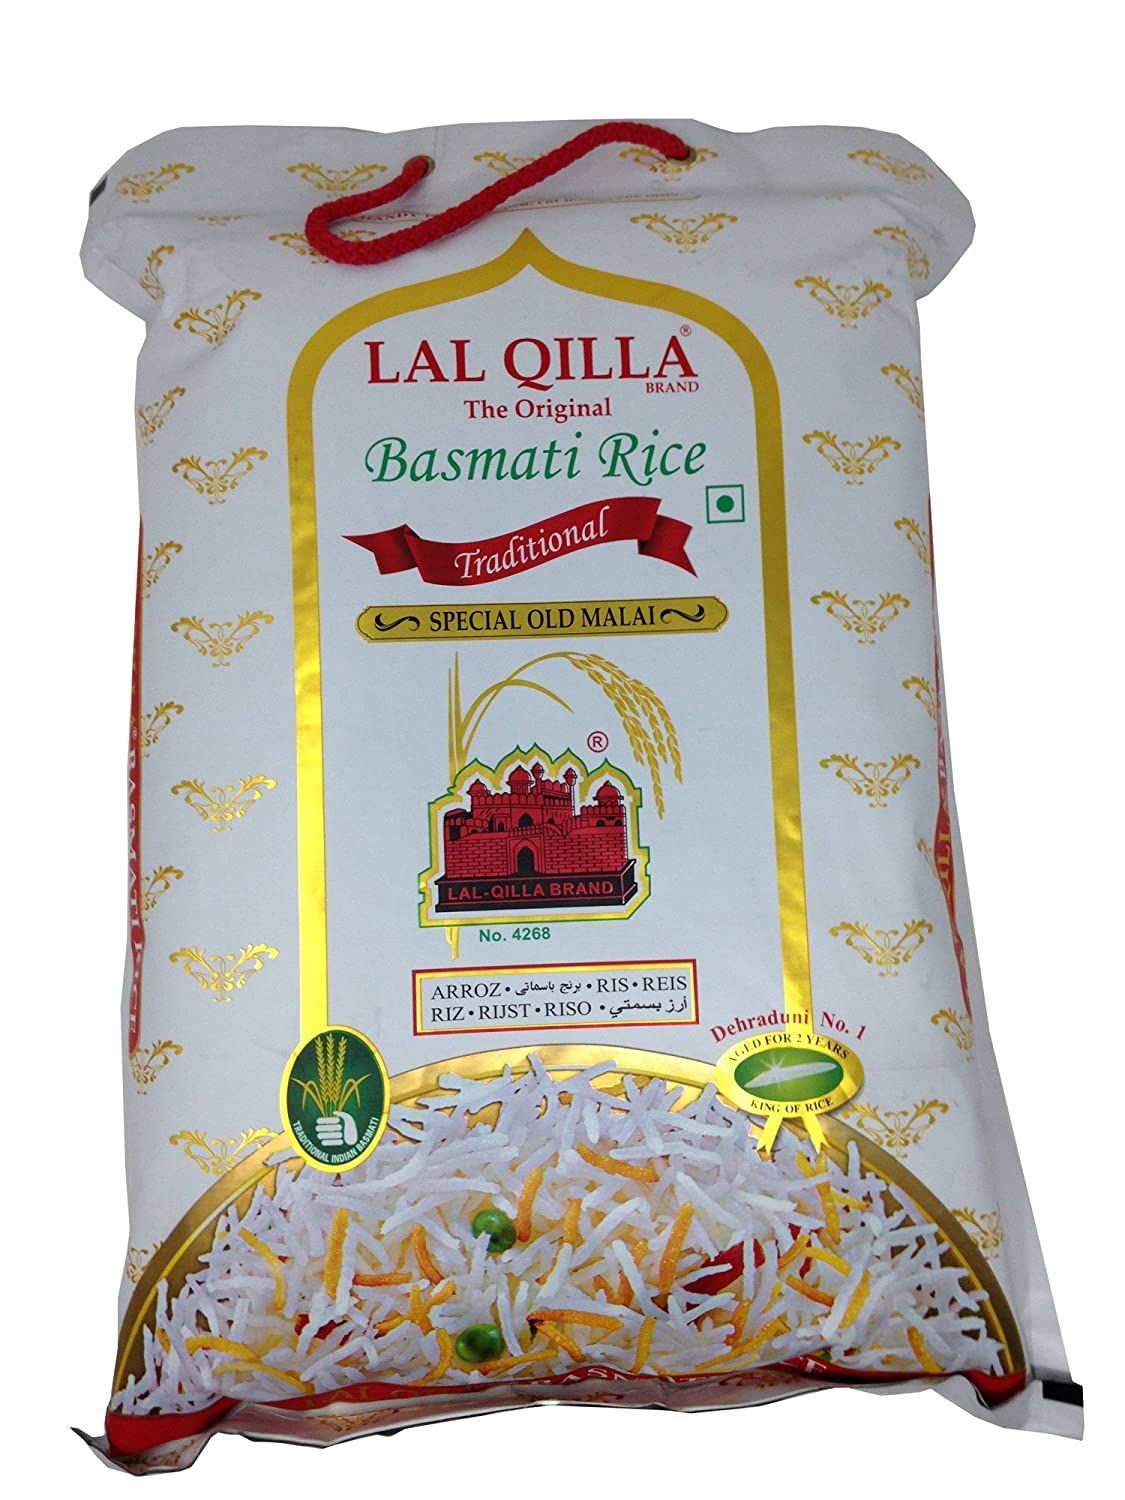 Lal Qilla Basmati Rice Image